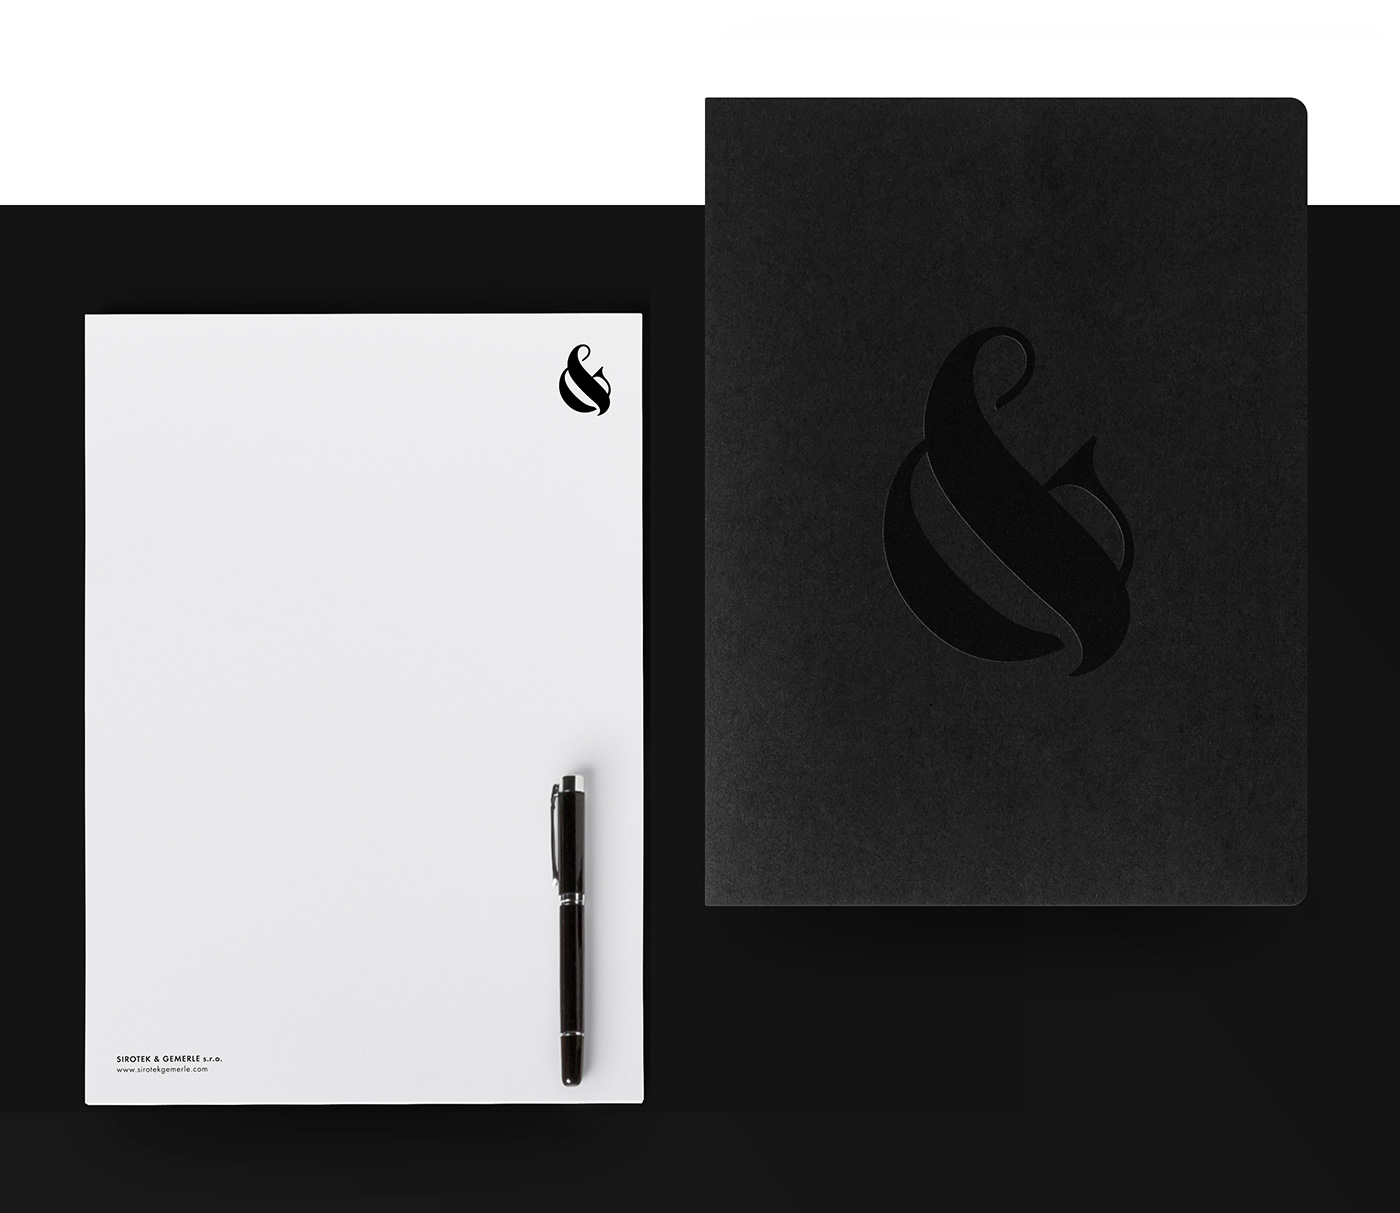 Sirotek Gemerle creative advertise agency b&w logo design black and white video brand identity visual minimal elegant